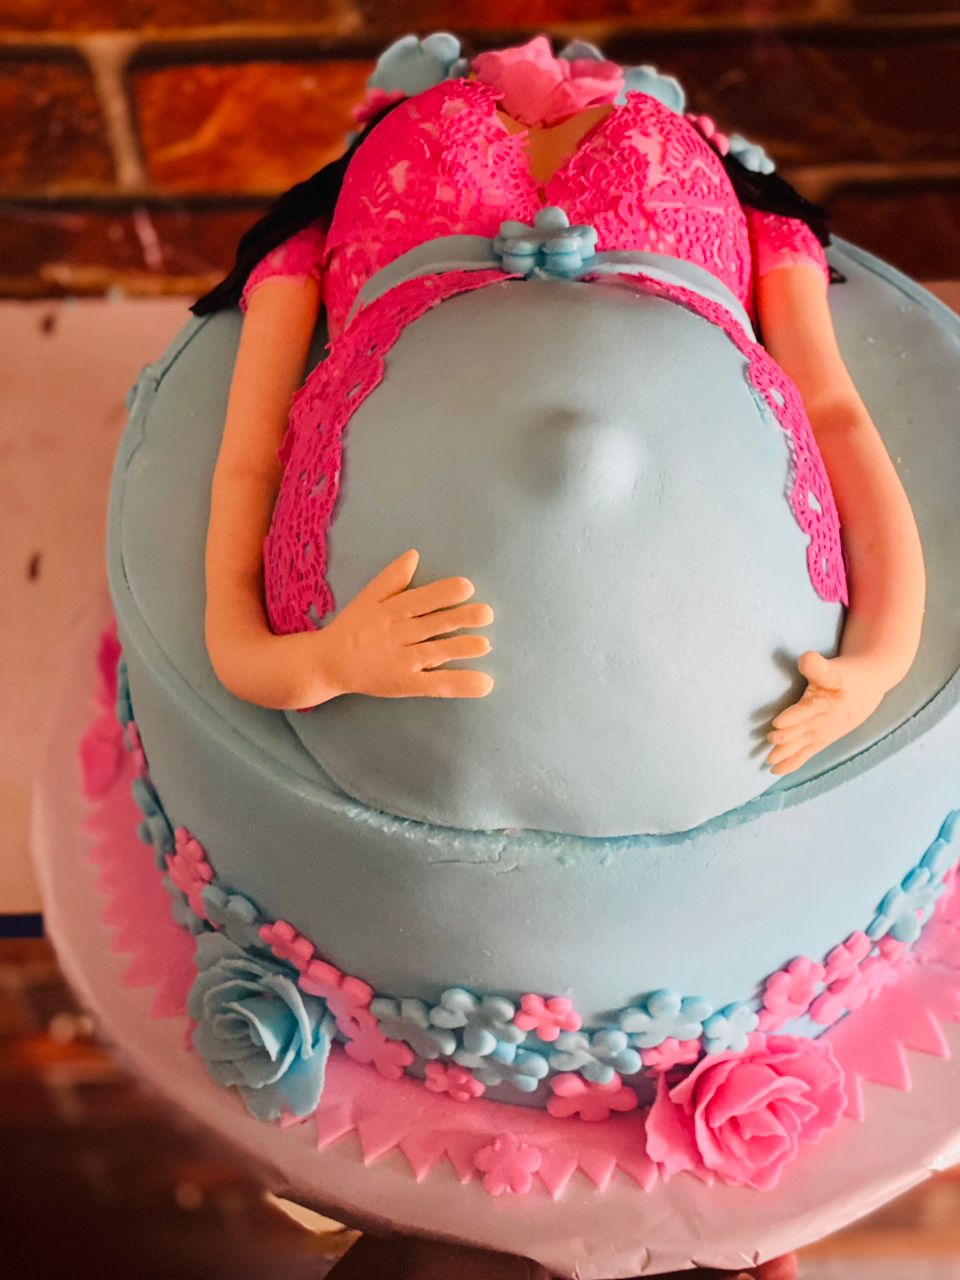 EXPECTING BABY SHOWER CAKE 